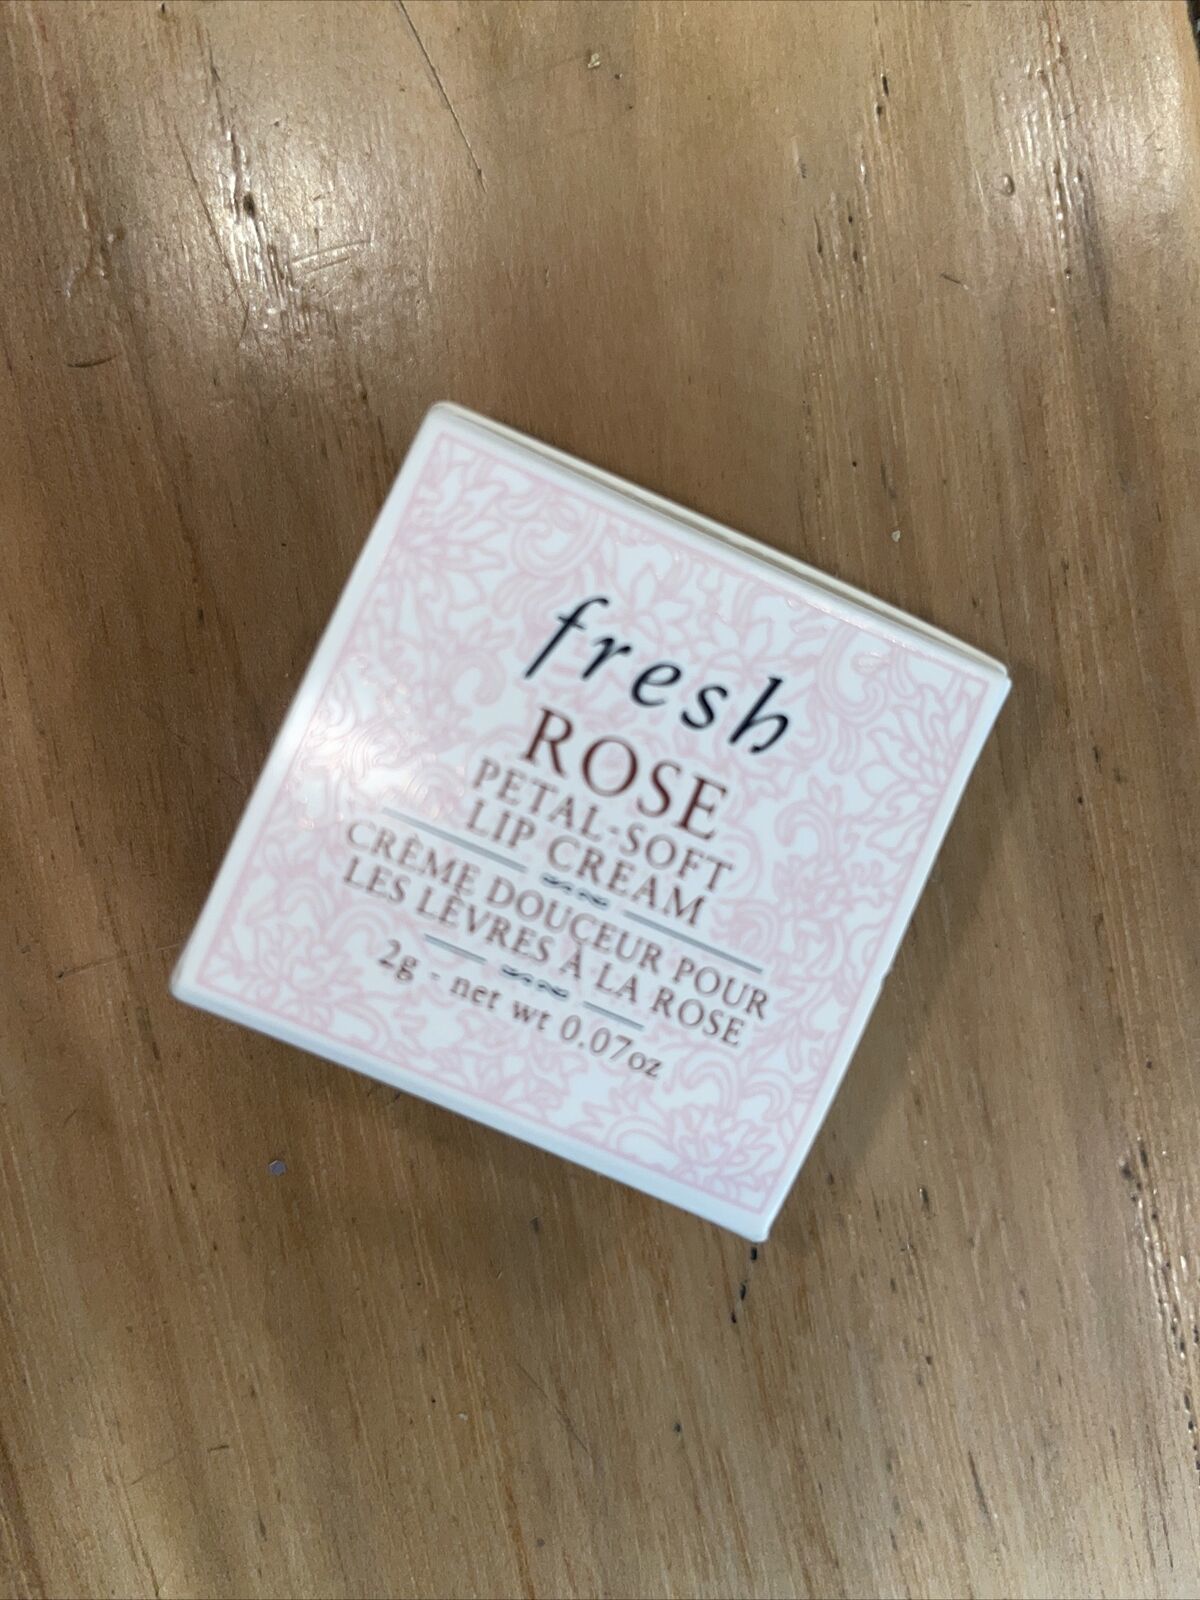 Primary image for Fresh Rose Petal Soft Lip Cream Travel Size 2g / 0.07 oz  NIB